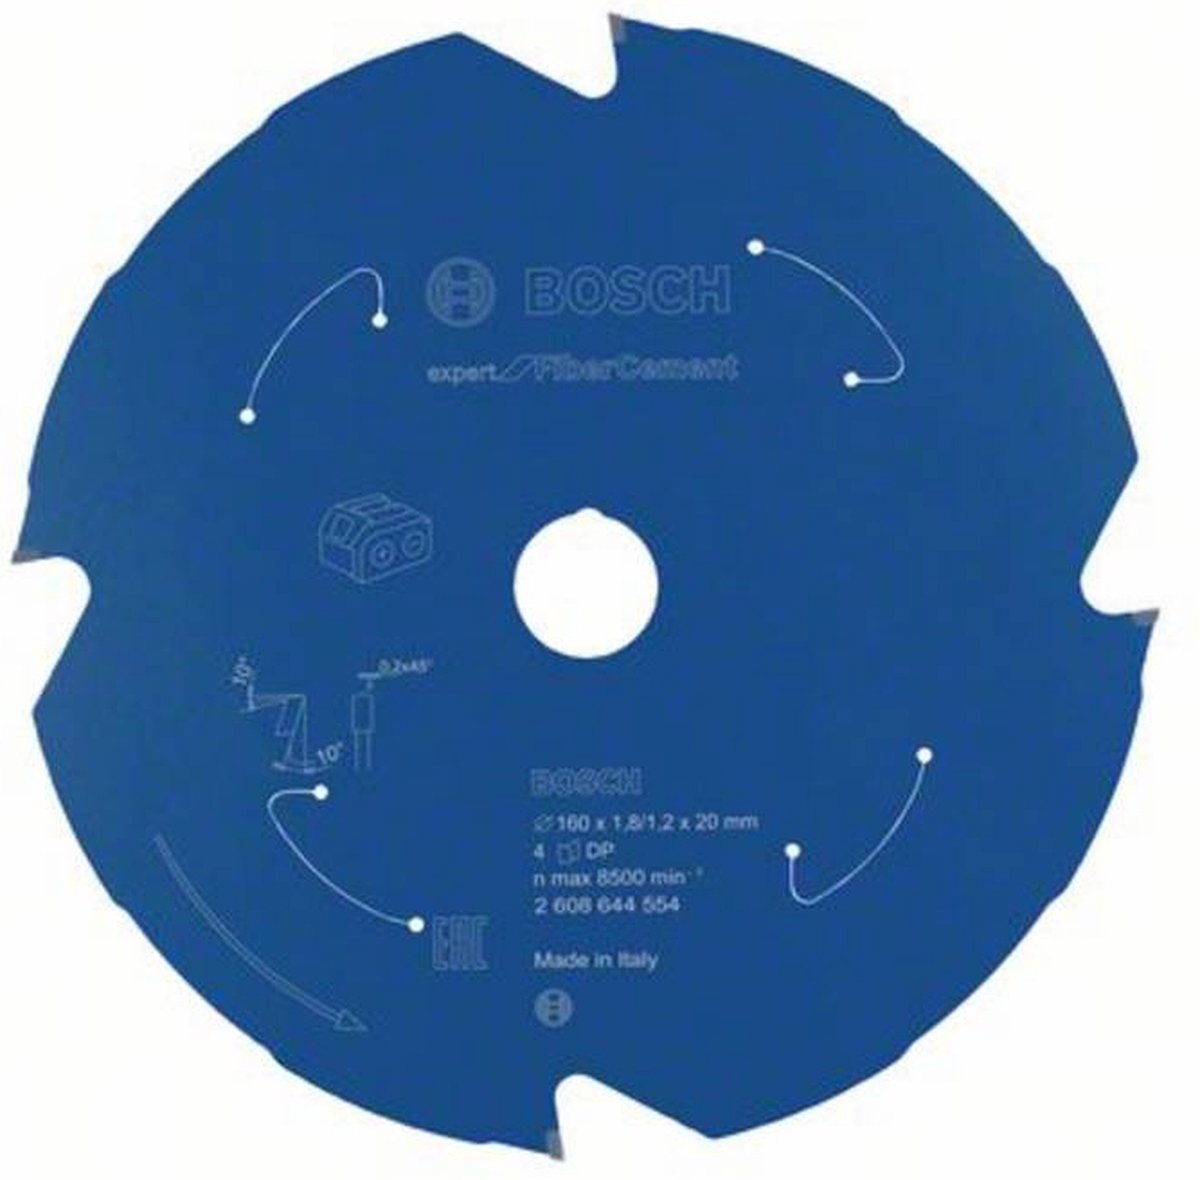 Bosch - Hoja de sierra circular Experto para fibra, 160 x 1.8 / 1.2 x 20, 4 dientes